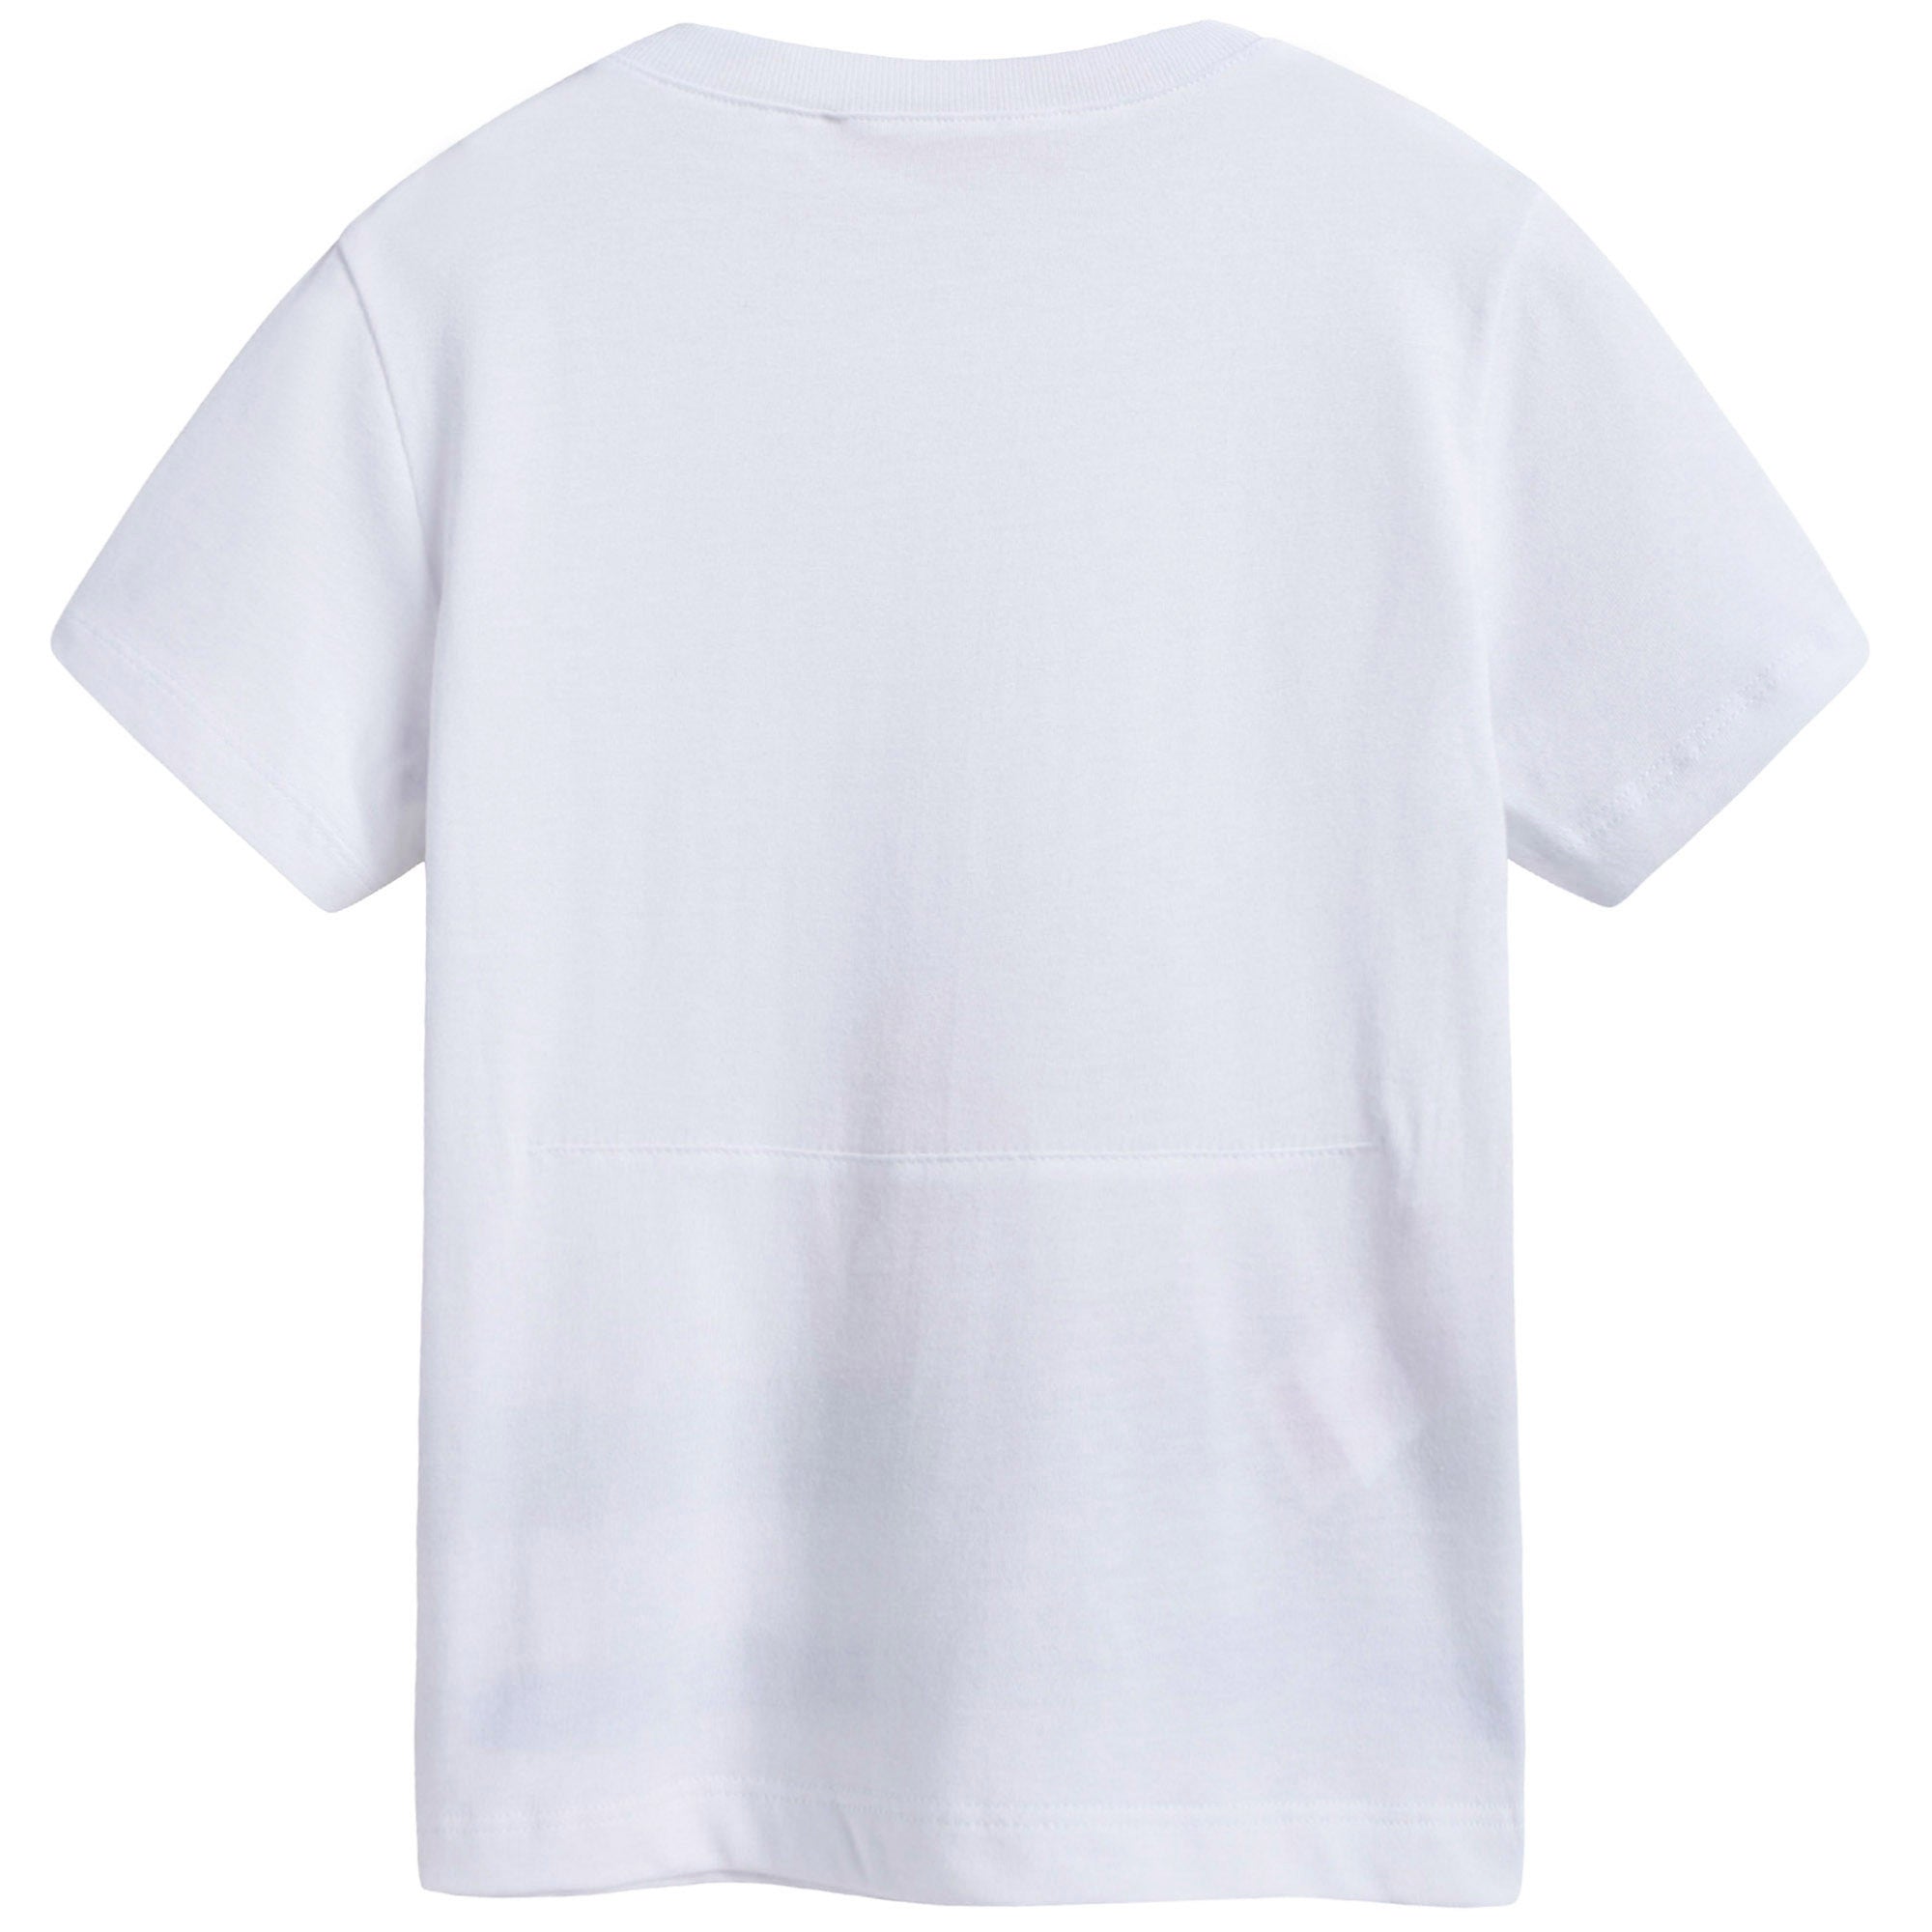 Girls White House Printed Cotton T-shirt